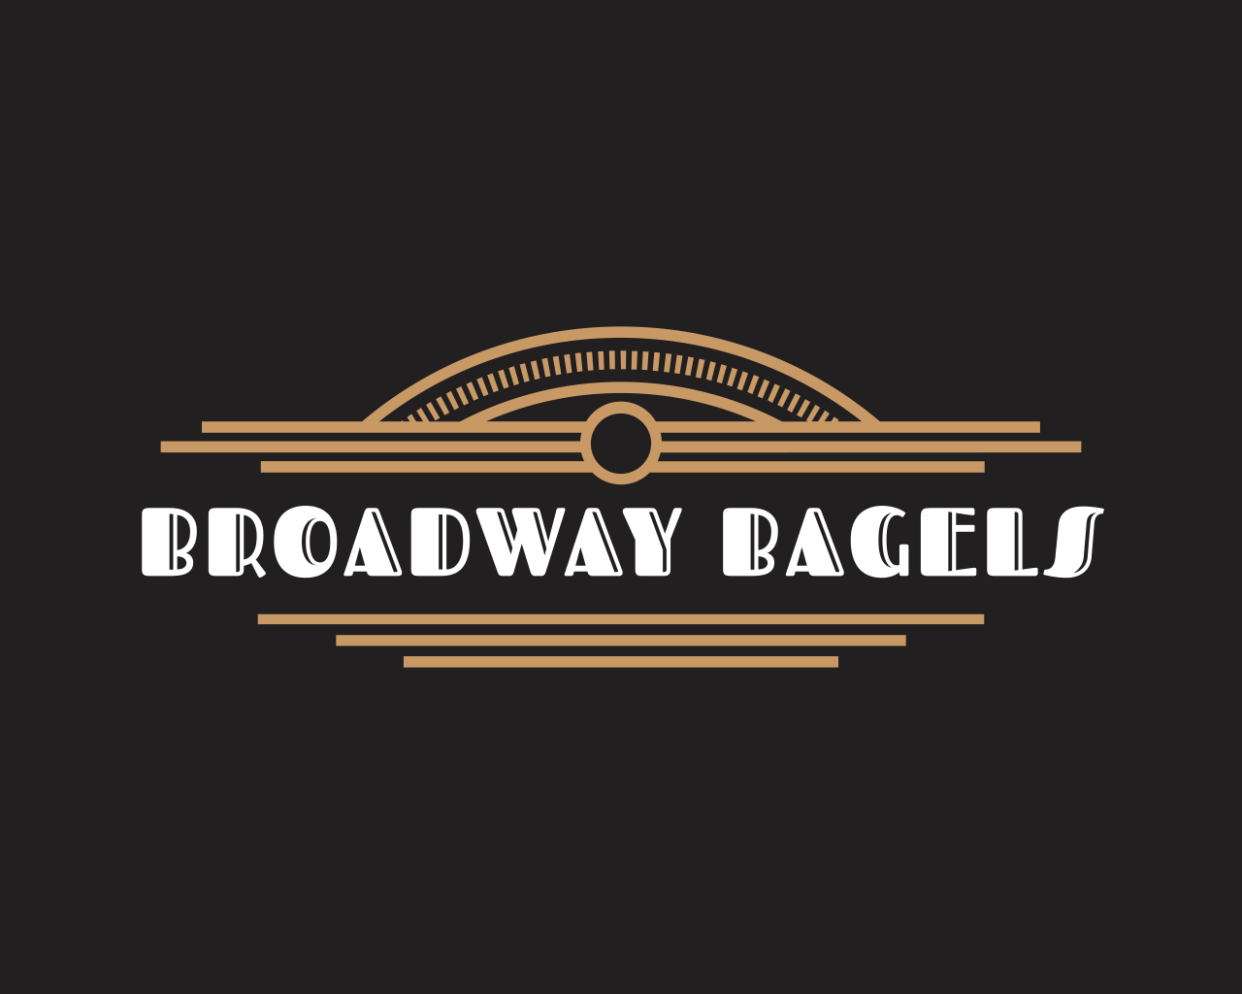 Broadway Bagels is opening soon in Springfield.